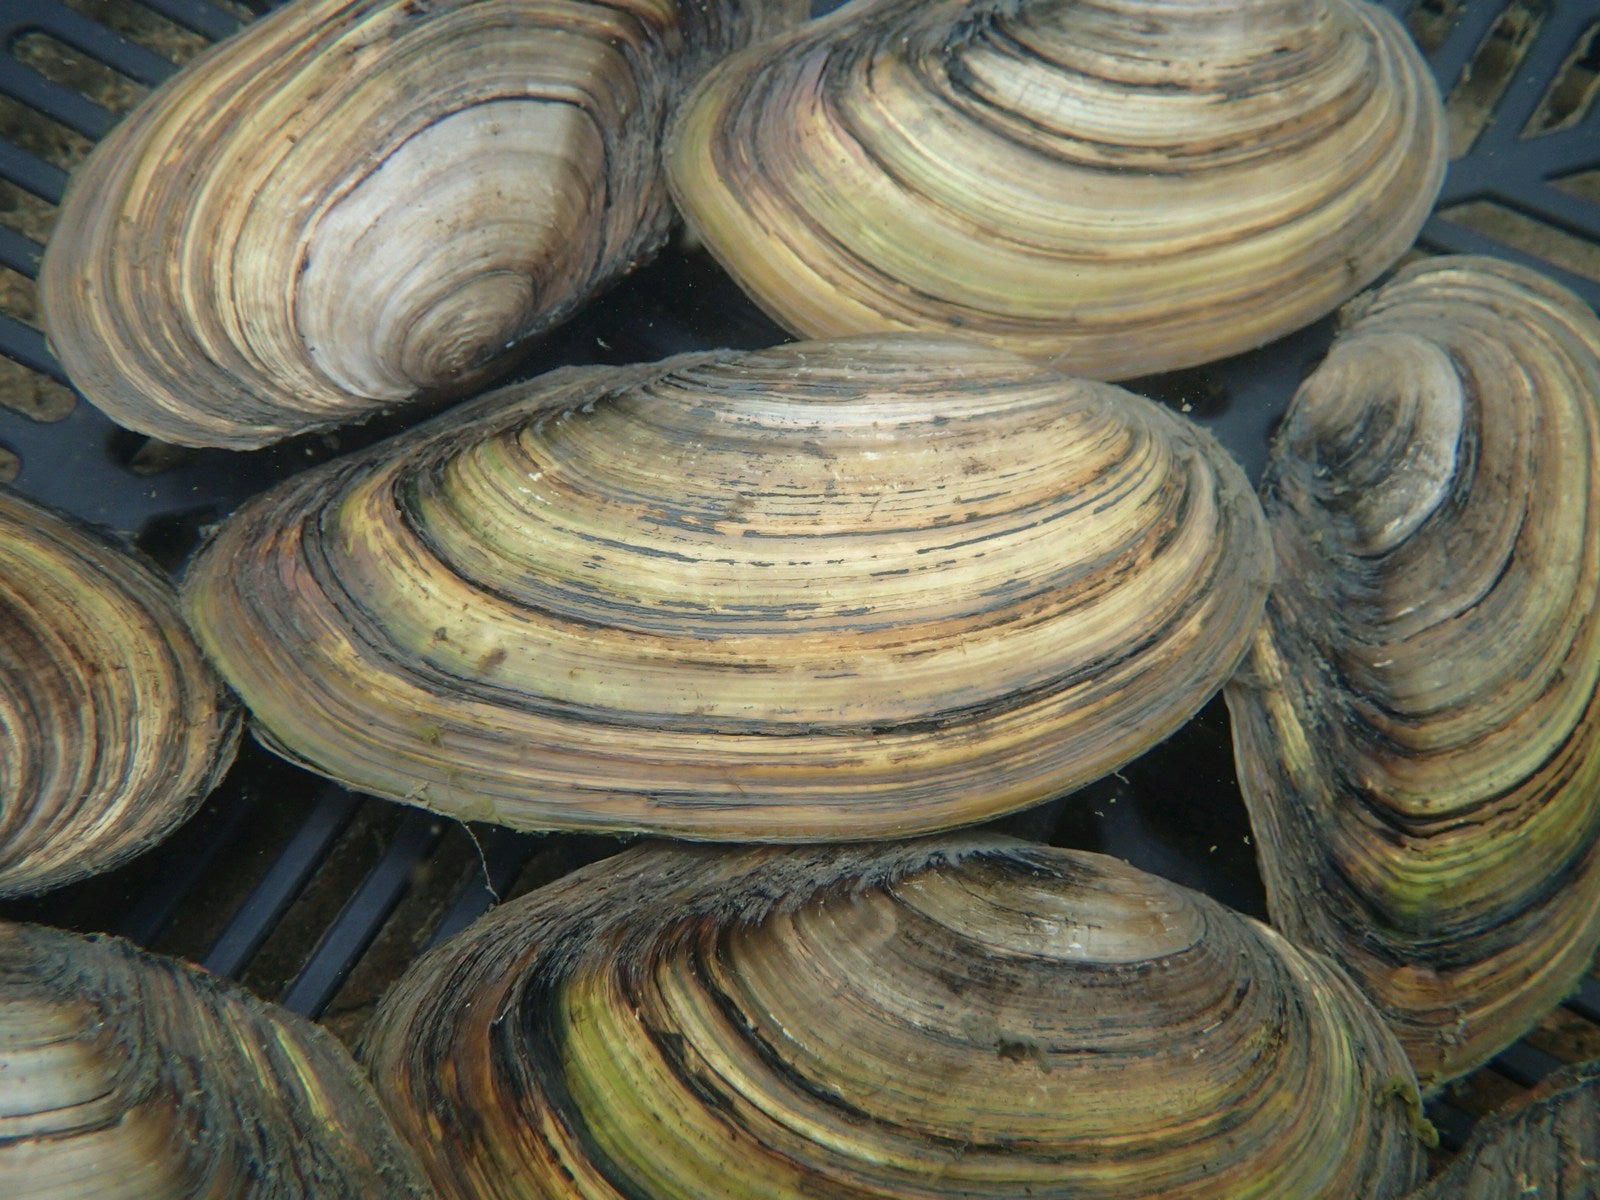 Mussels & Pond Snails